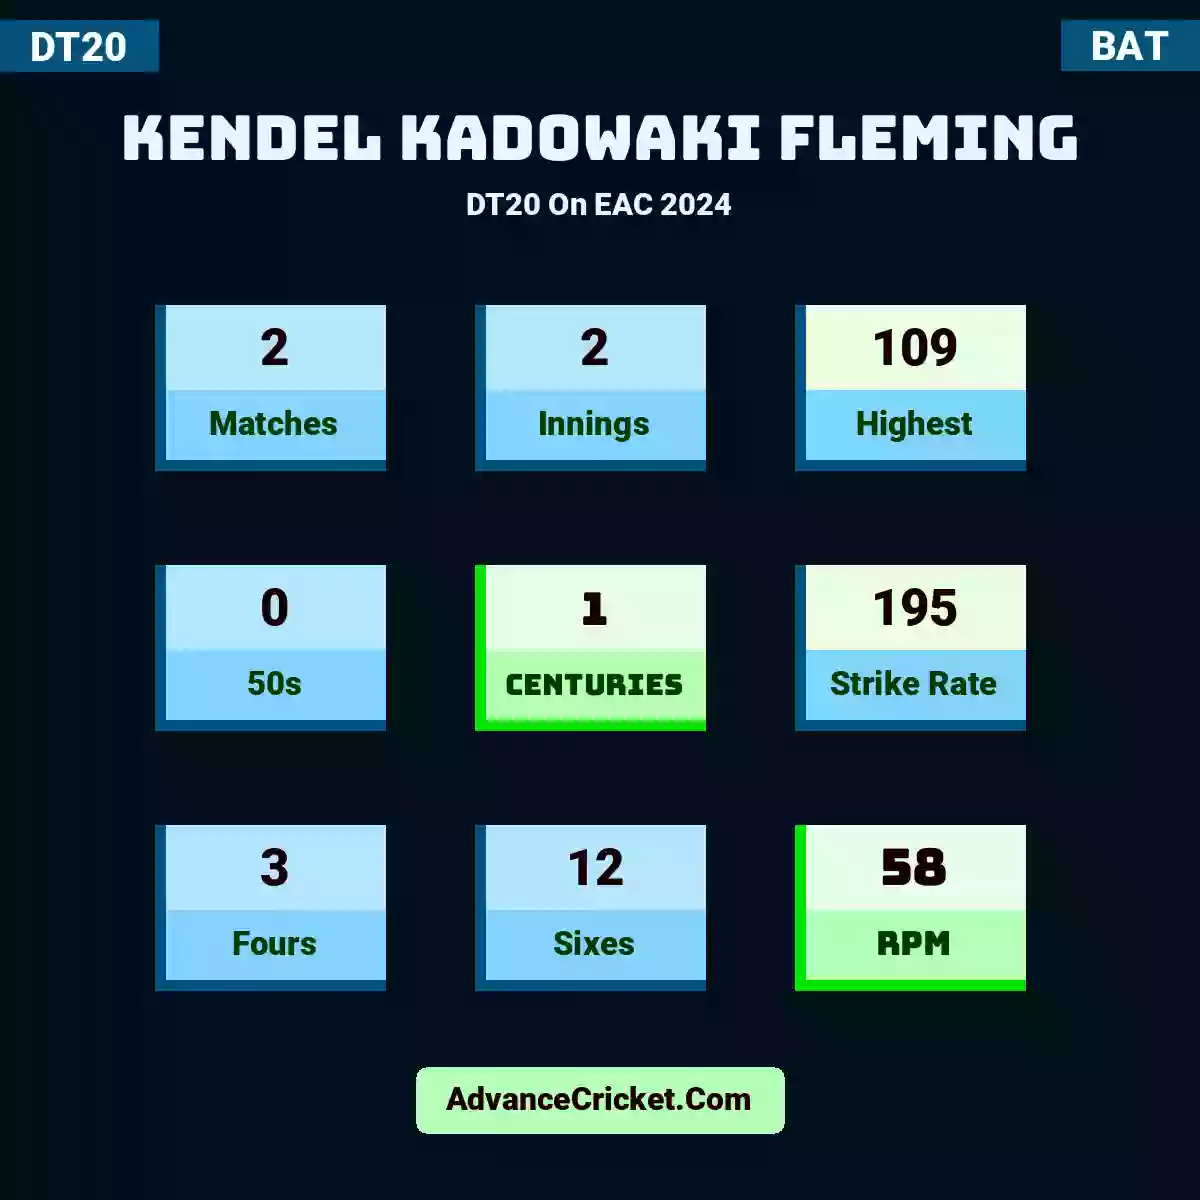 Kendel Kadowaki Fleming DT20  On EAC 2024, Kendel Kadowaki Fleming played 2 matches, scored 109 runs as highest, 0 half-centuries, and 1 centuries, with a strike rate of 195. K.Kadowaki Fleming hit 3 fours and 12 sixes, with an RPM of 58.